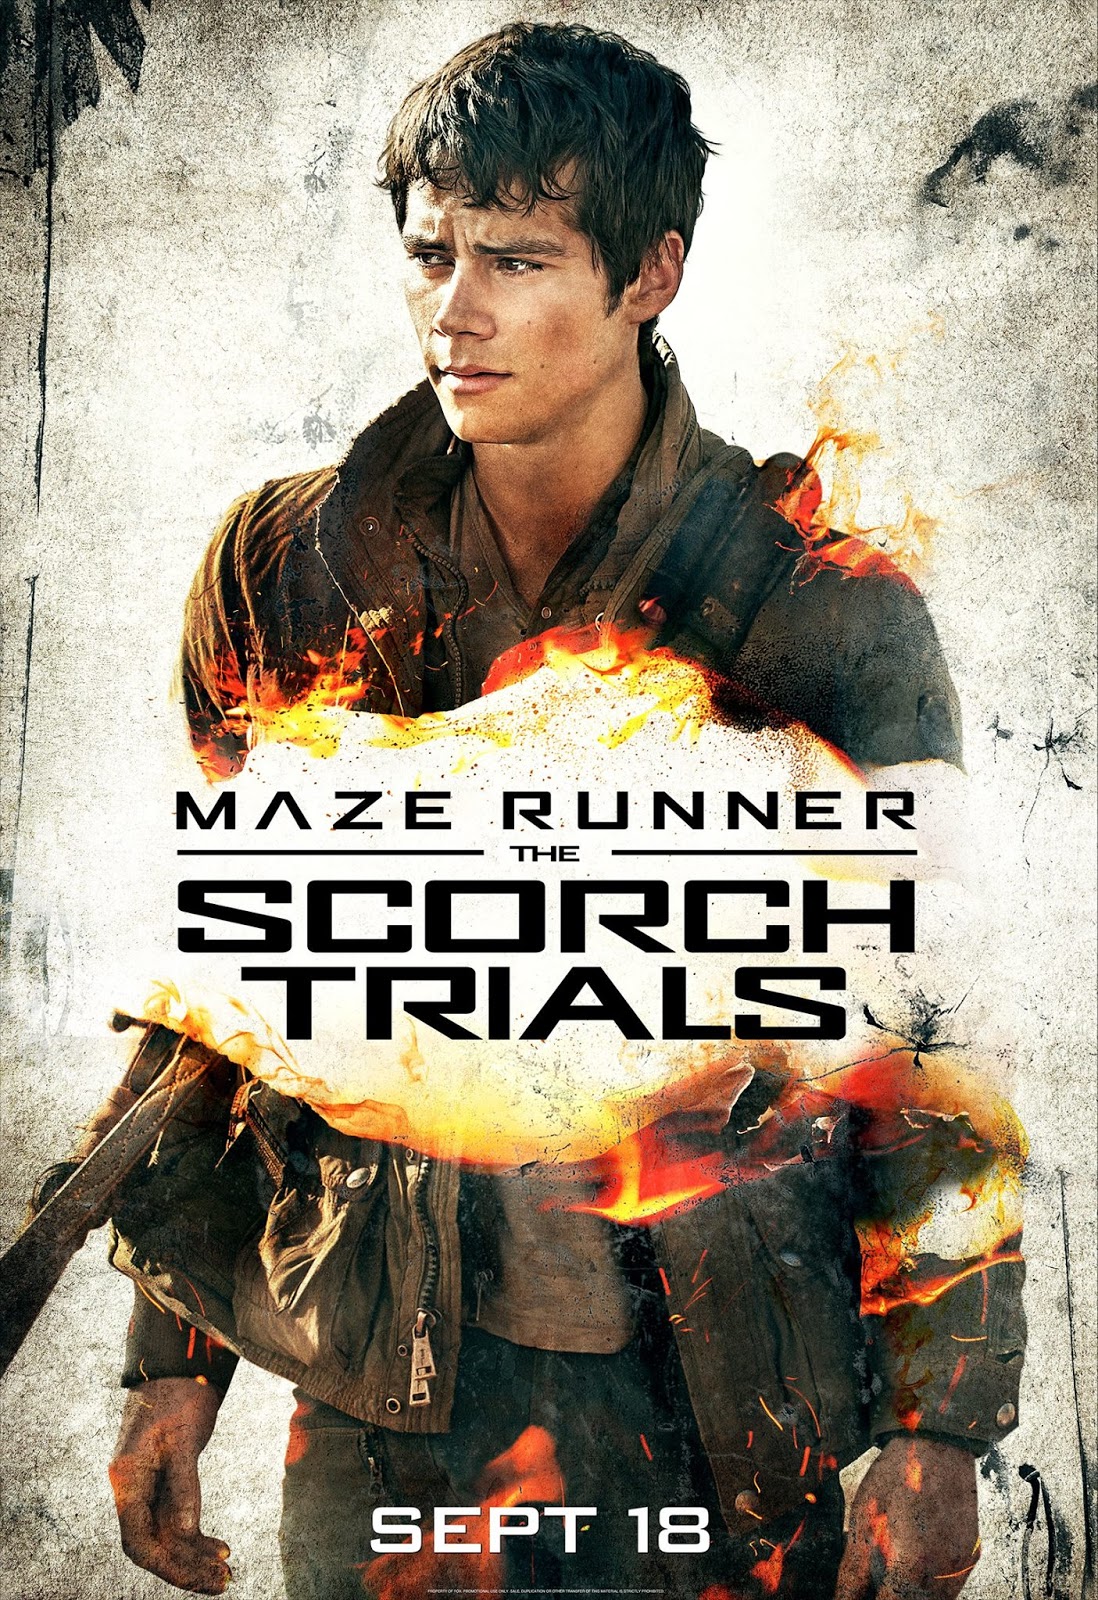 Review: 'Scorch Trials' heat up 'Maze' series